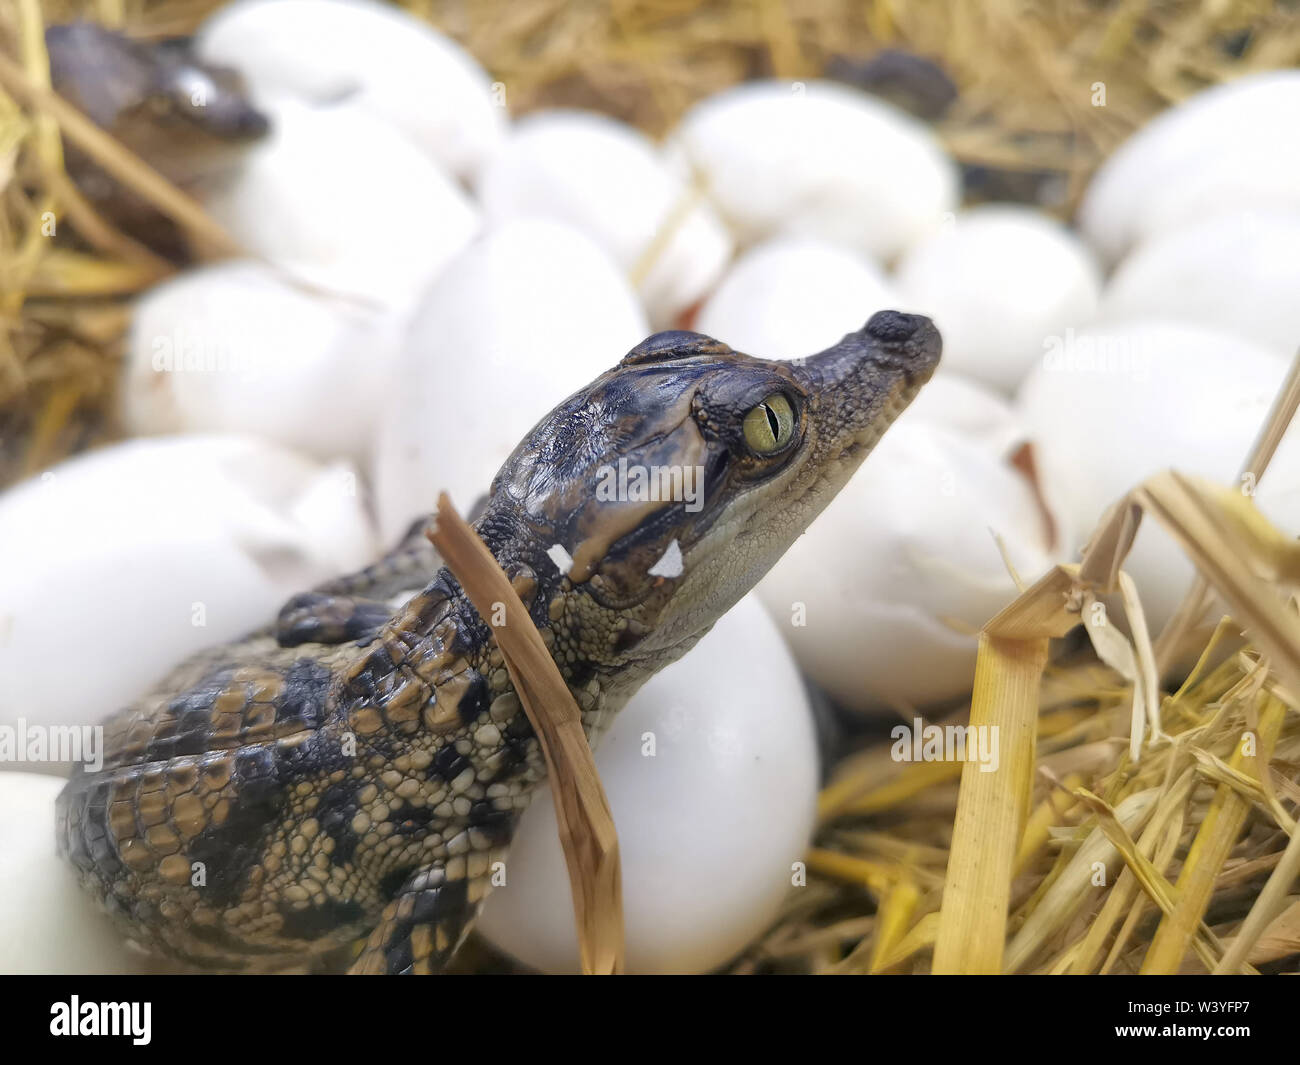 Baby Krokodile schlüpfen aus Eiern Stockfoto